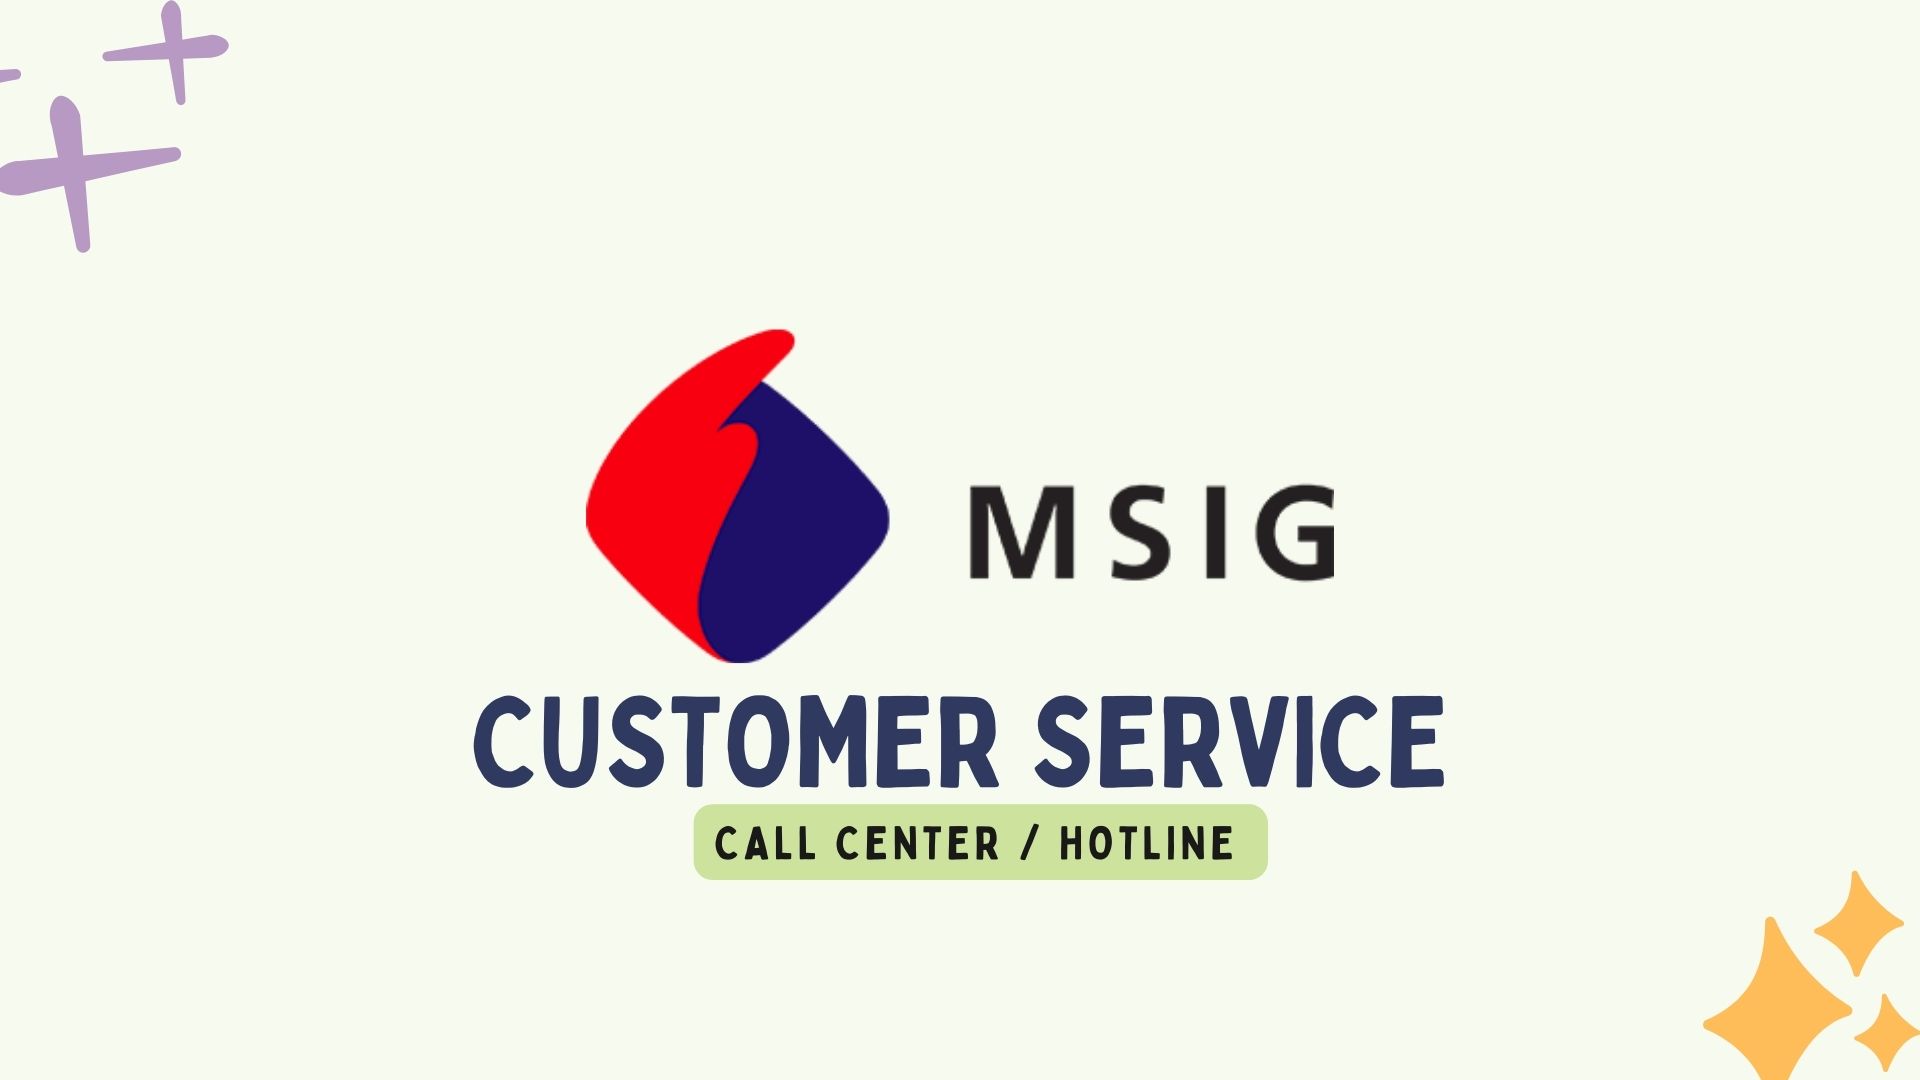 MSIG Customer Service